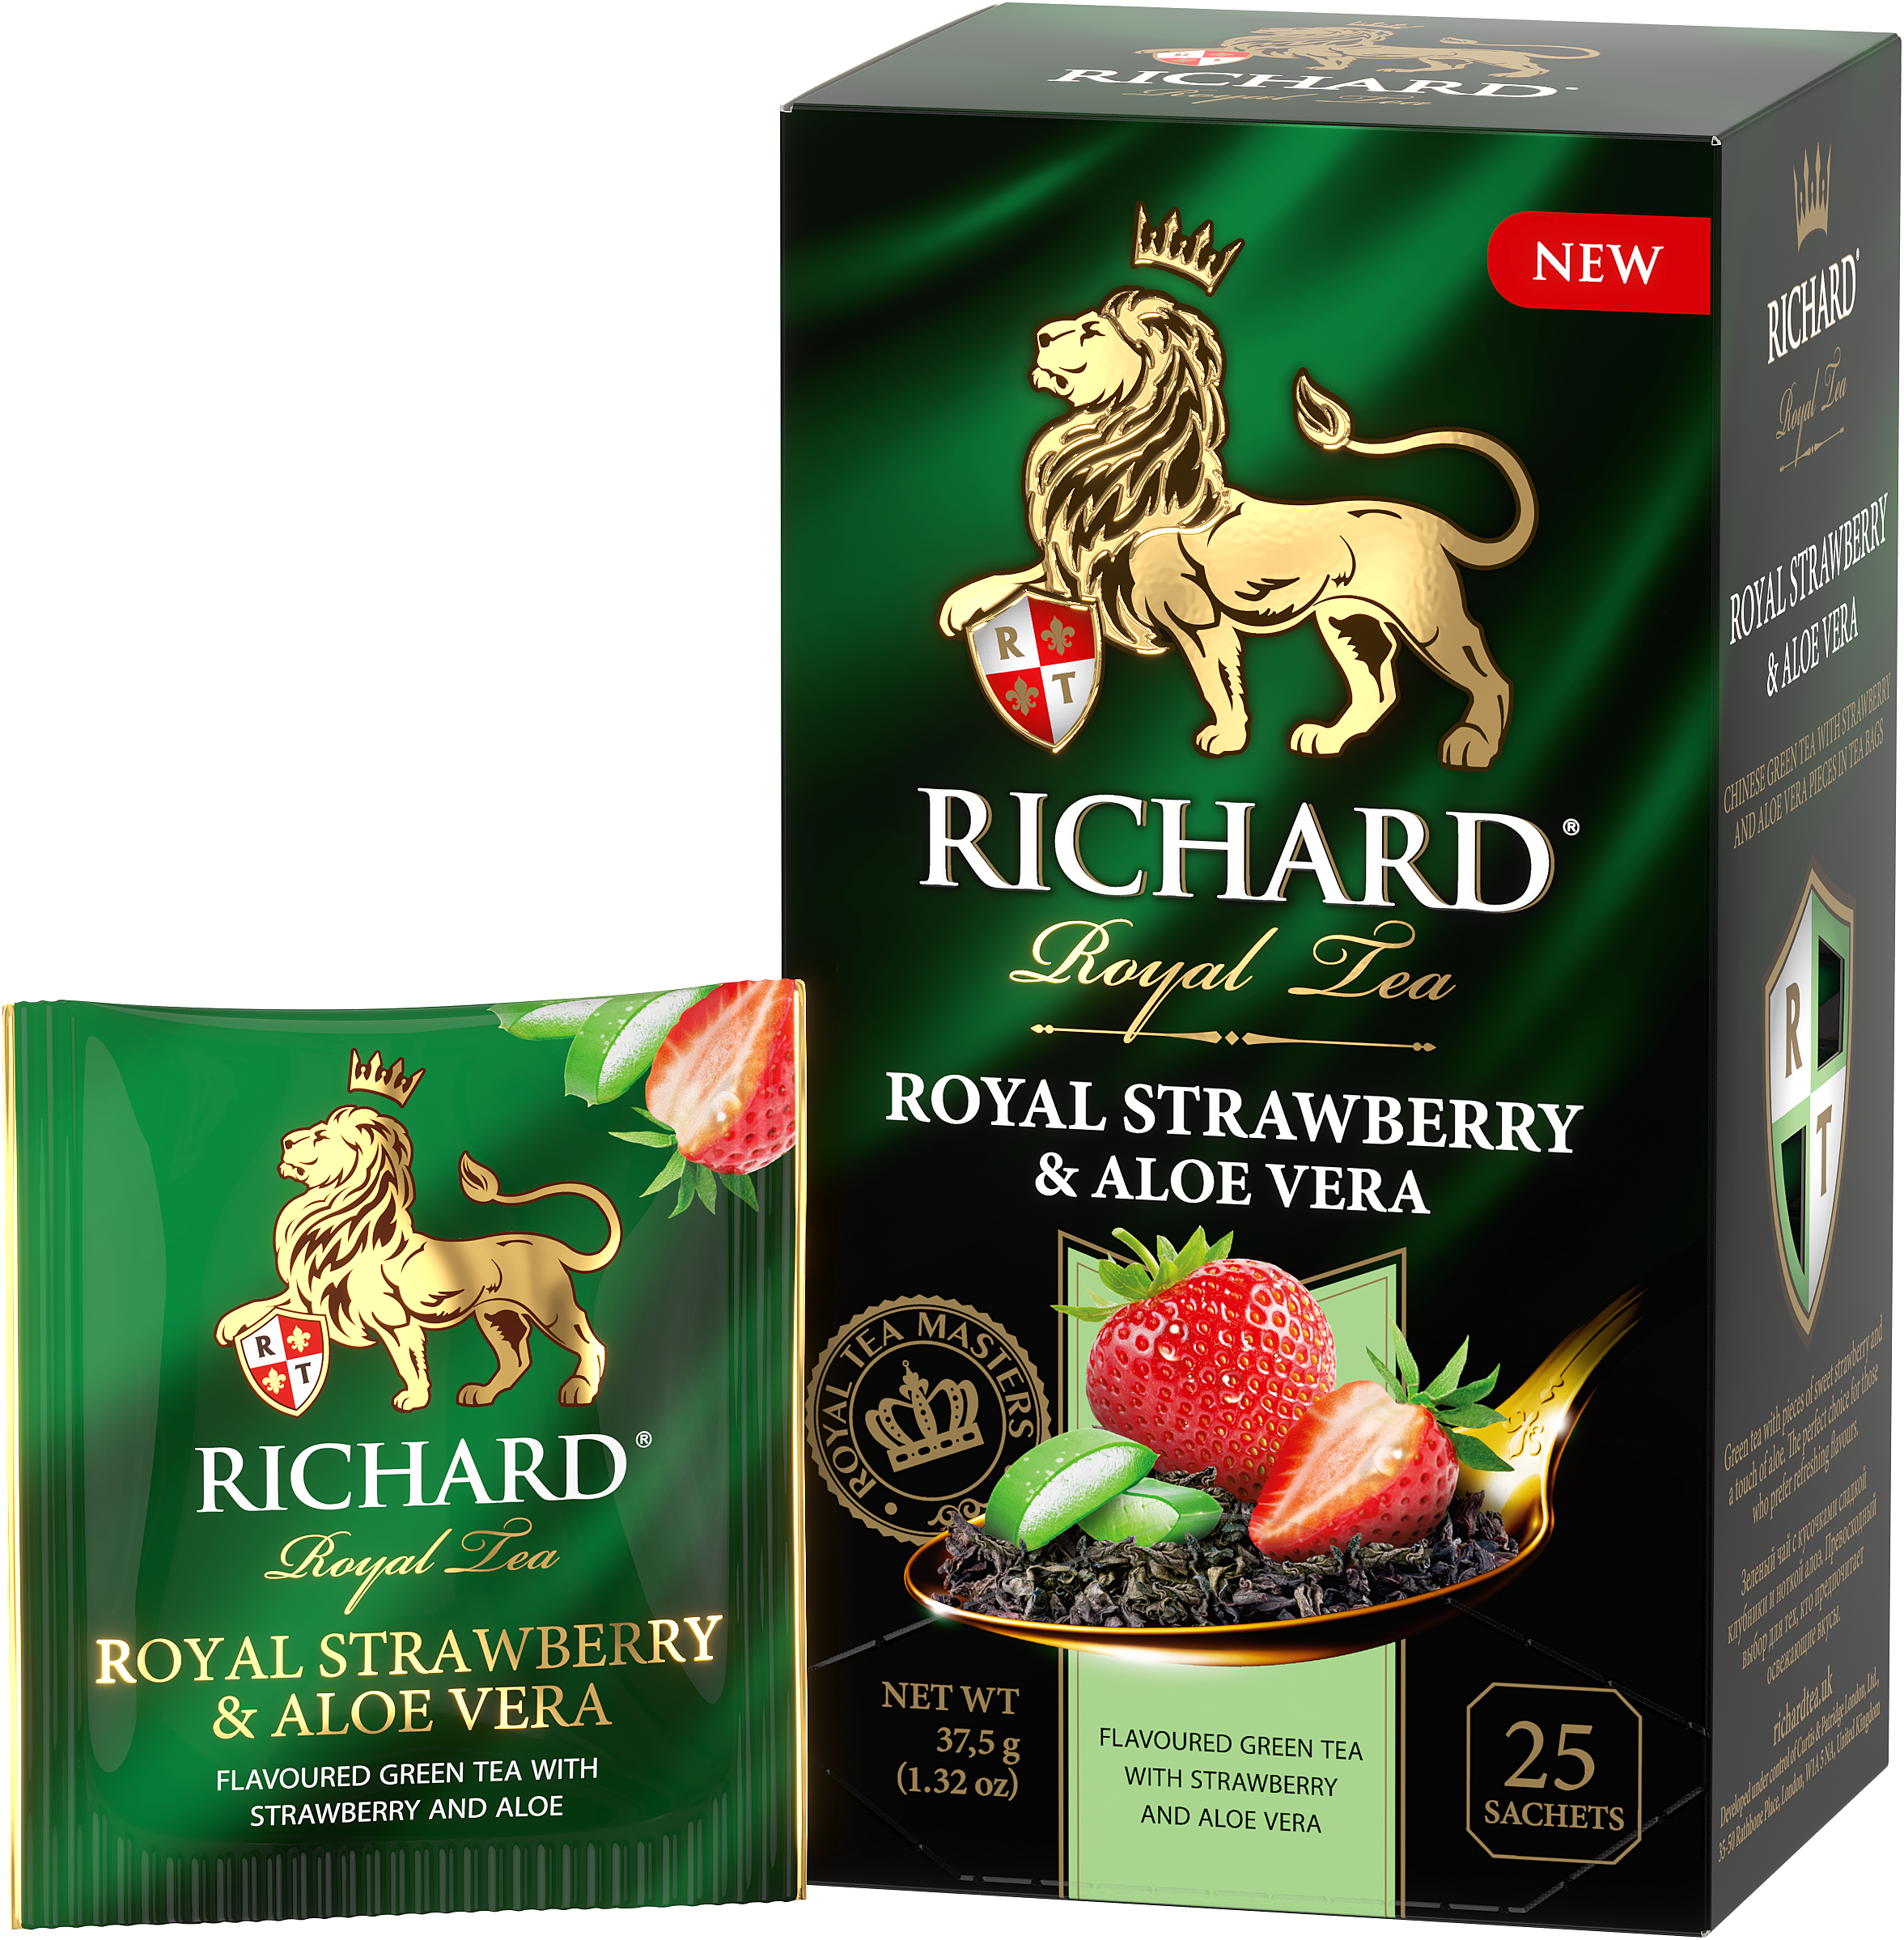 Richard Royal Strawberry & Aloe Vera flavoured green tea